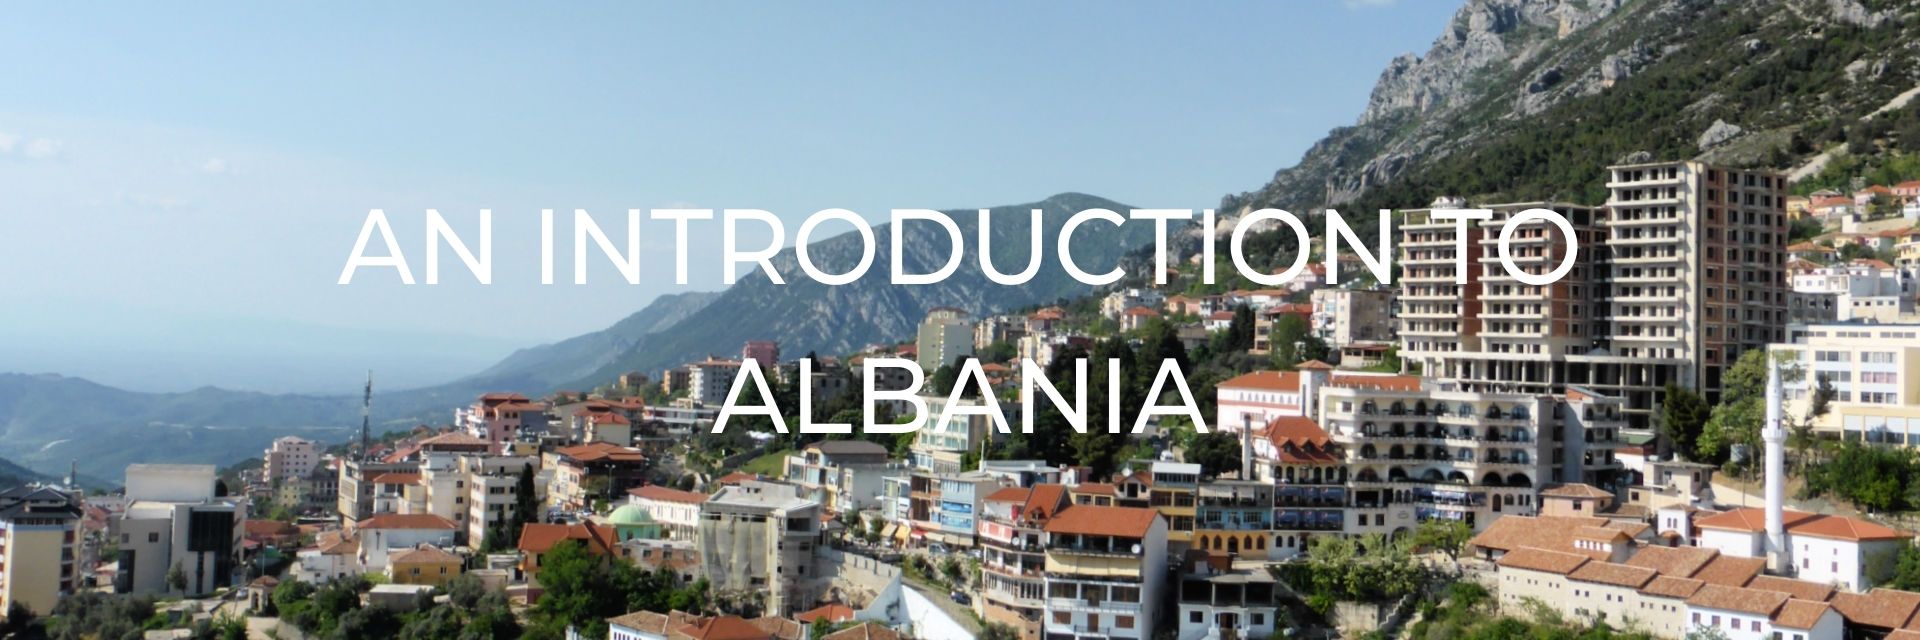 An Introduction to Albania Desktop Header